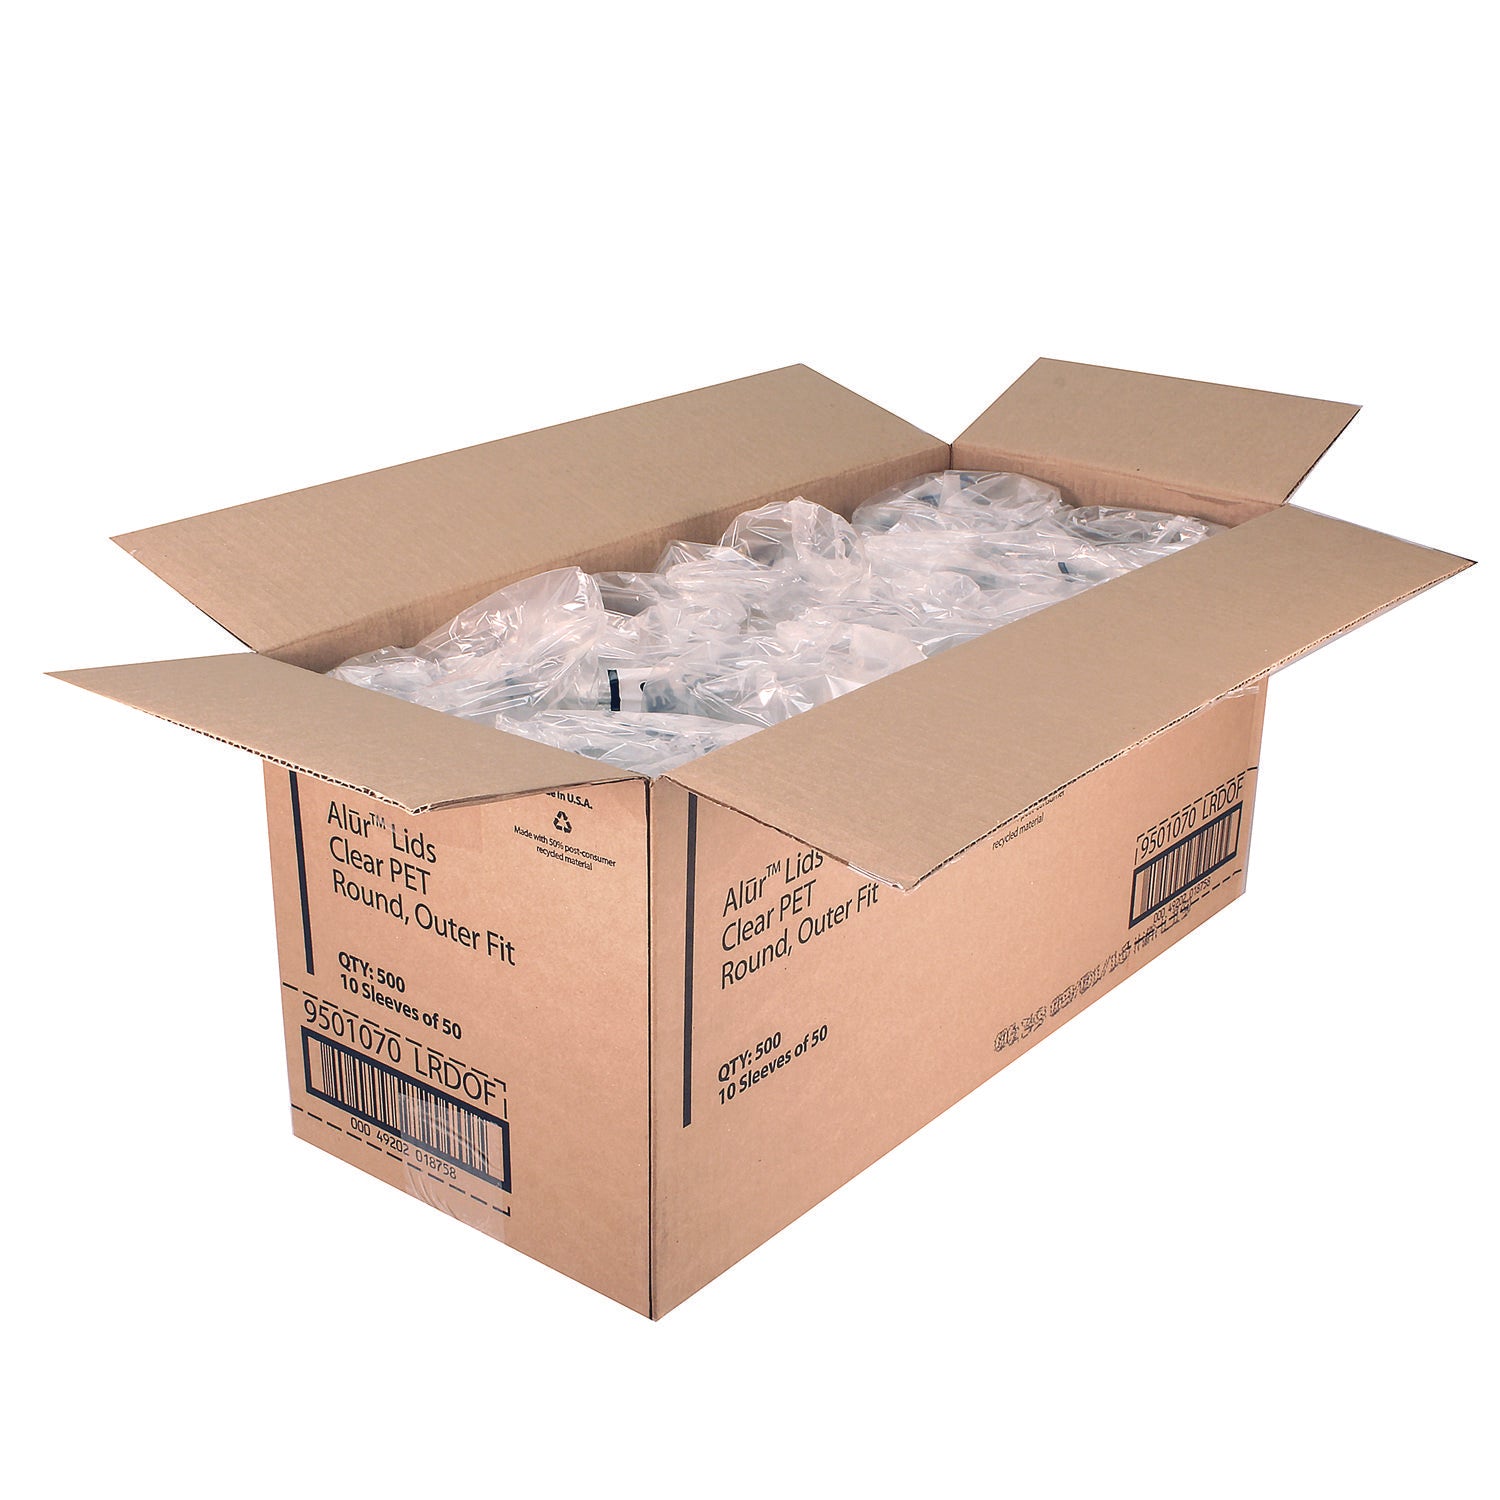 recycleware-round-deli-container-lids-clear-plastic-500-carton_fablrdof - 3